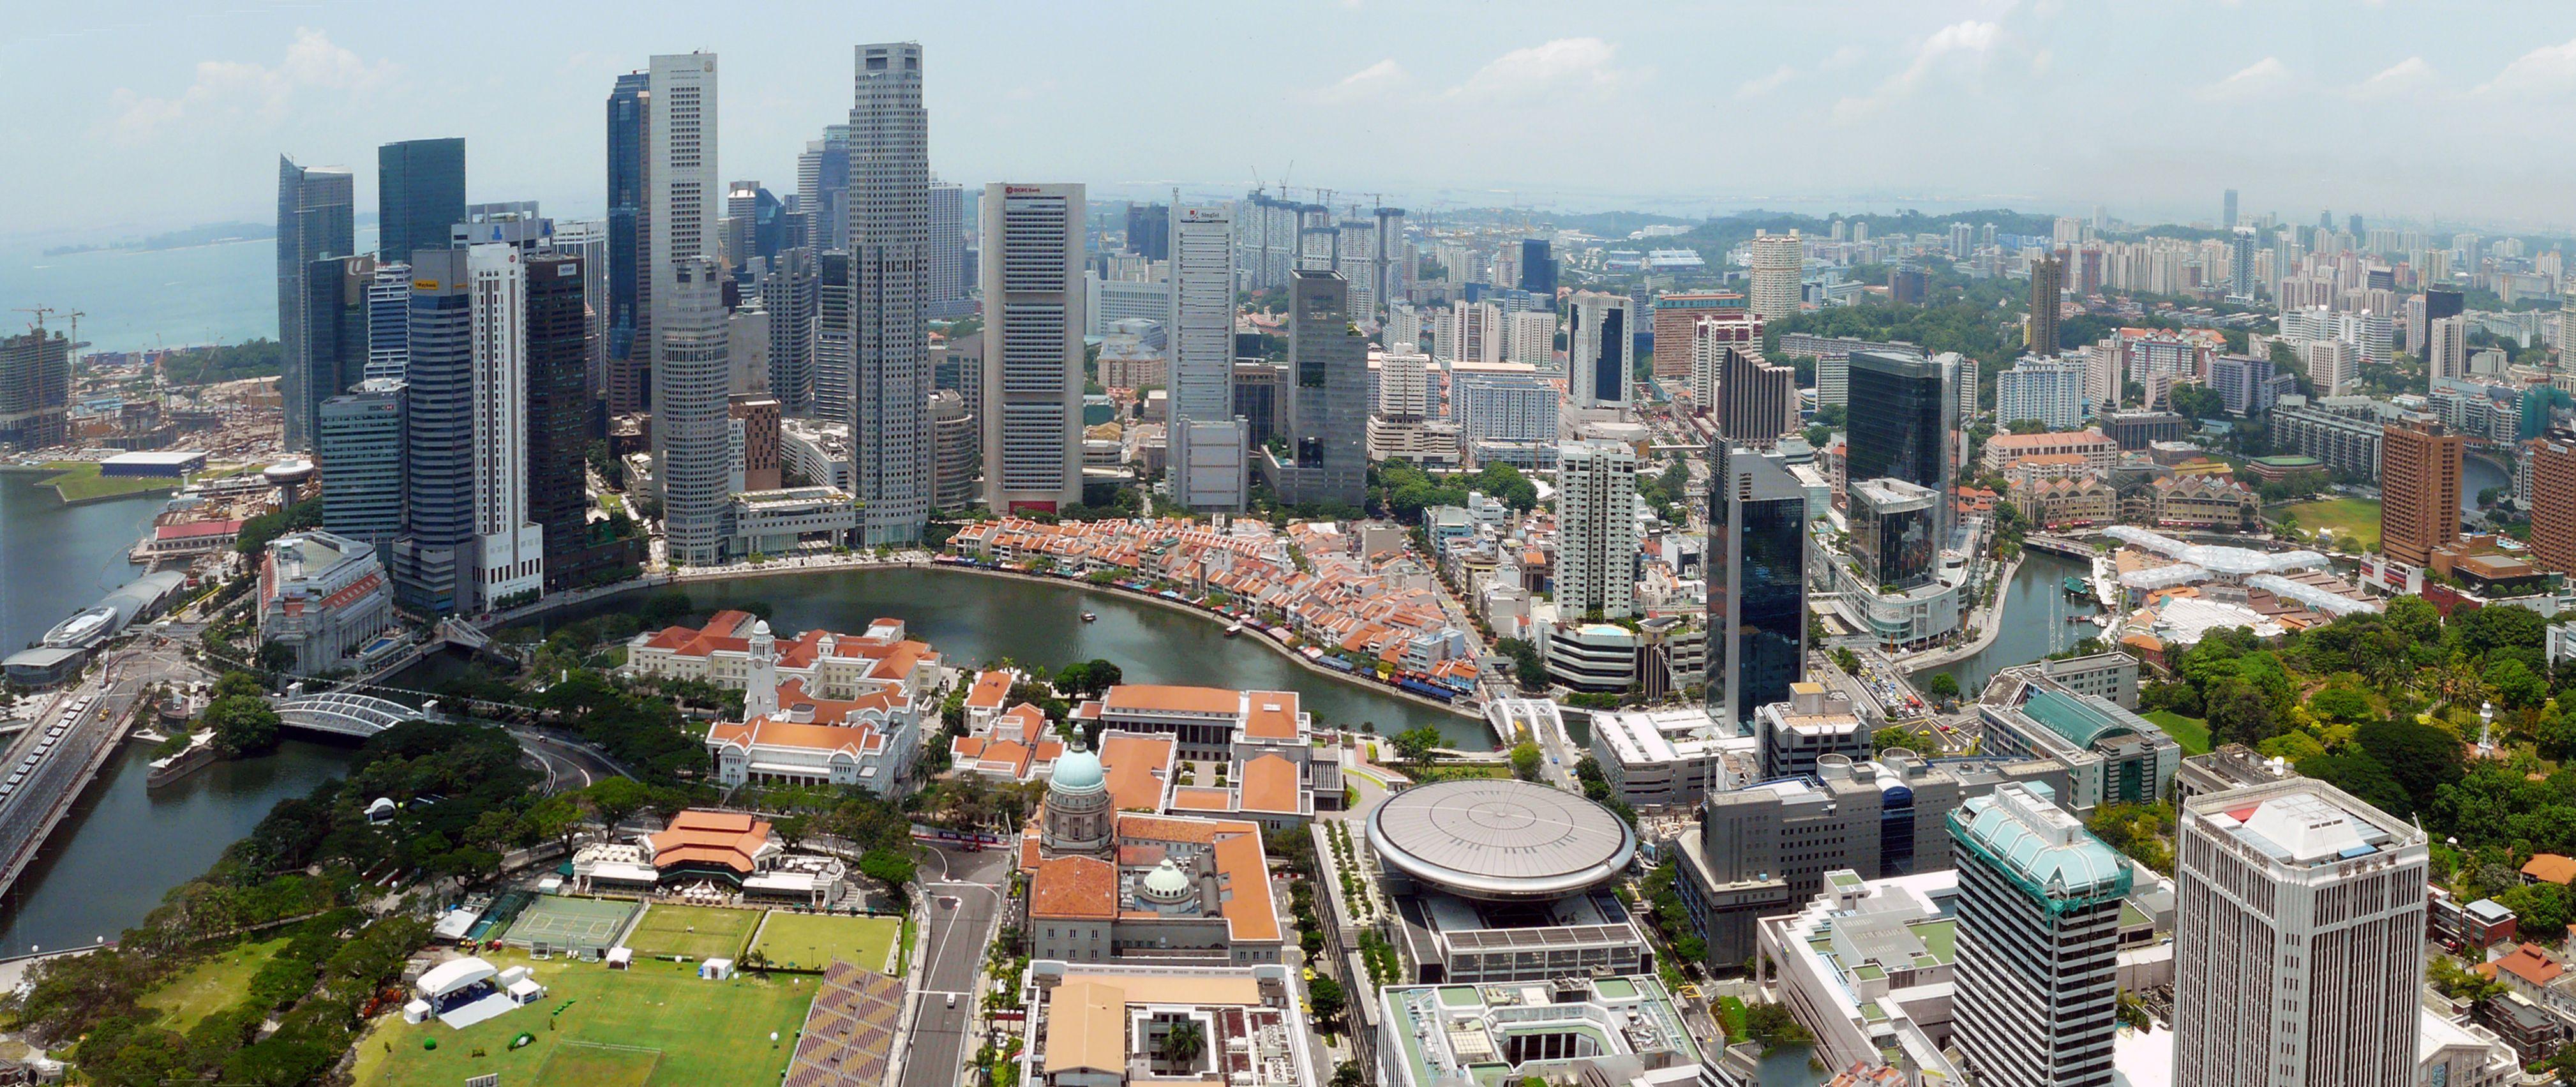 Singapore city HD Wallpaper Free Download. New HD Wallpaper